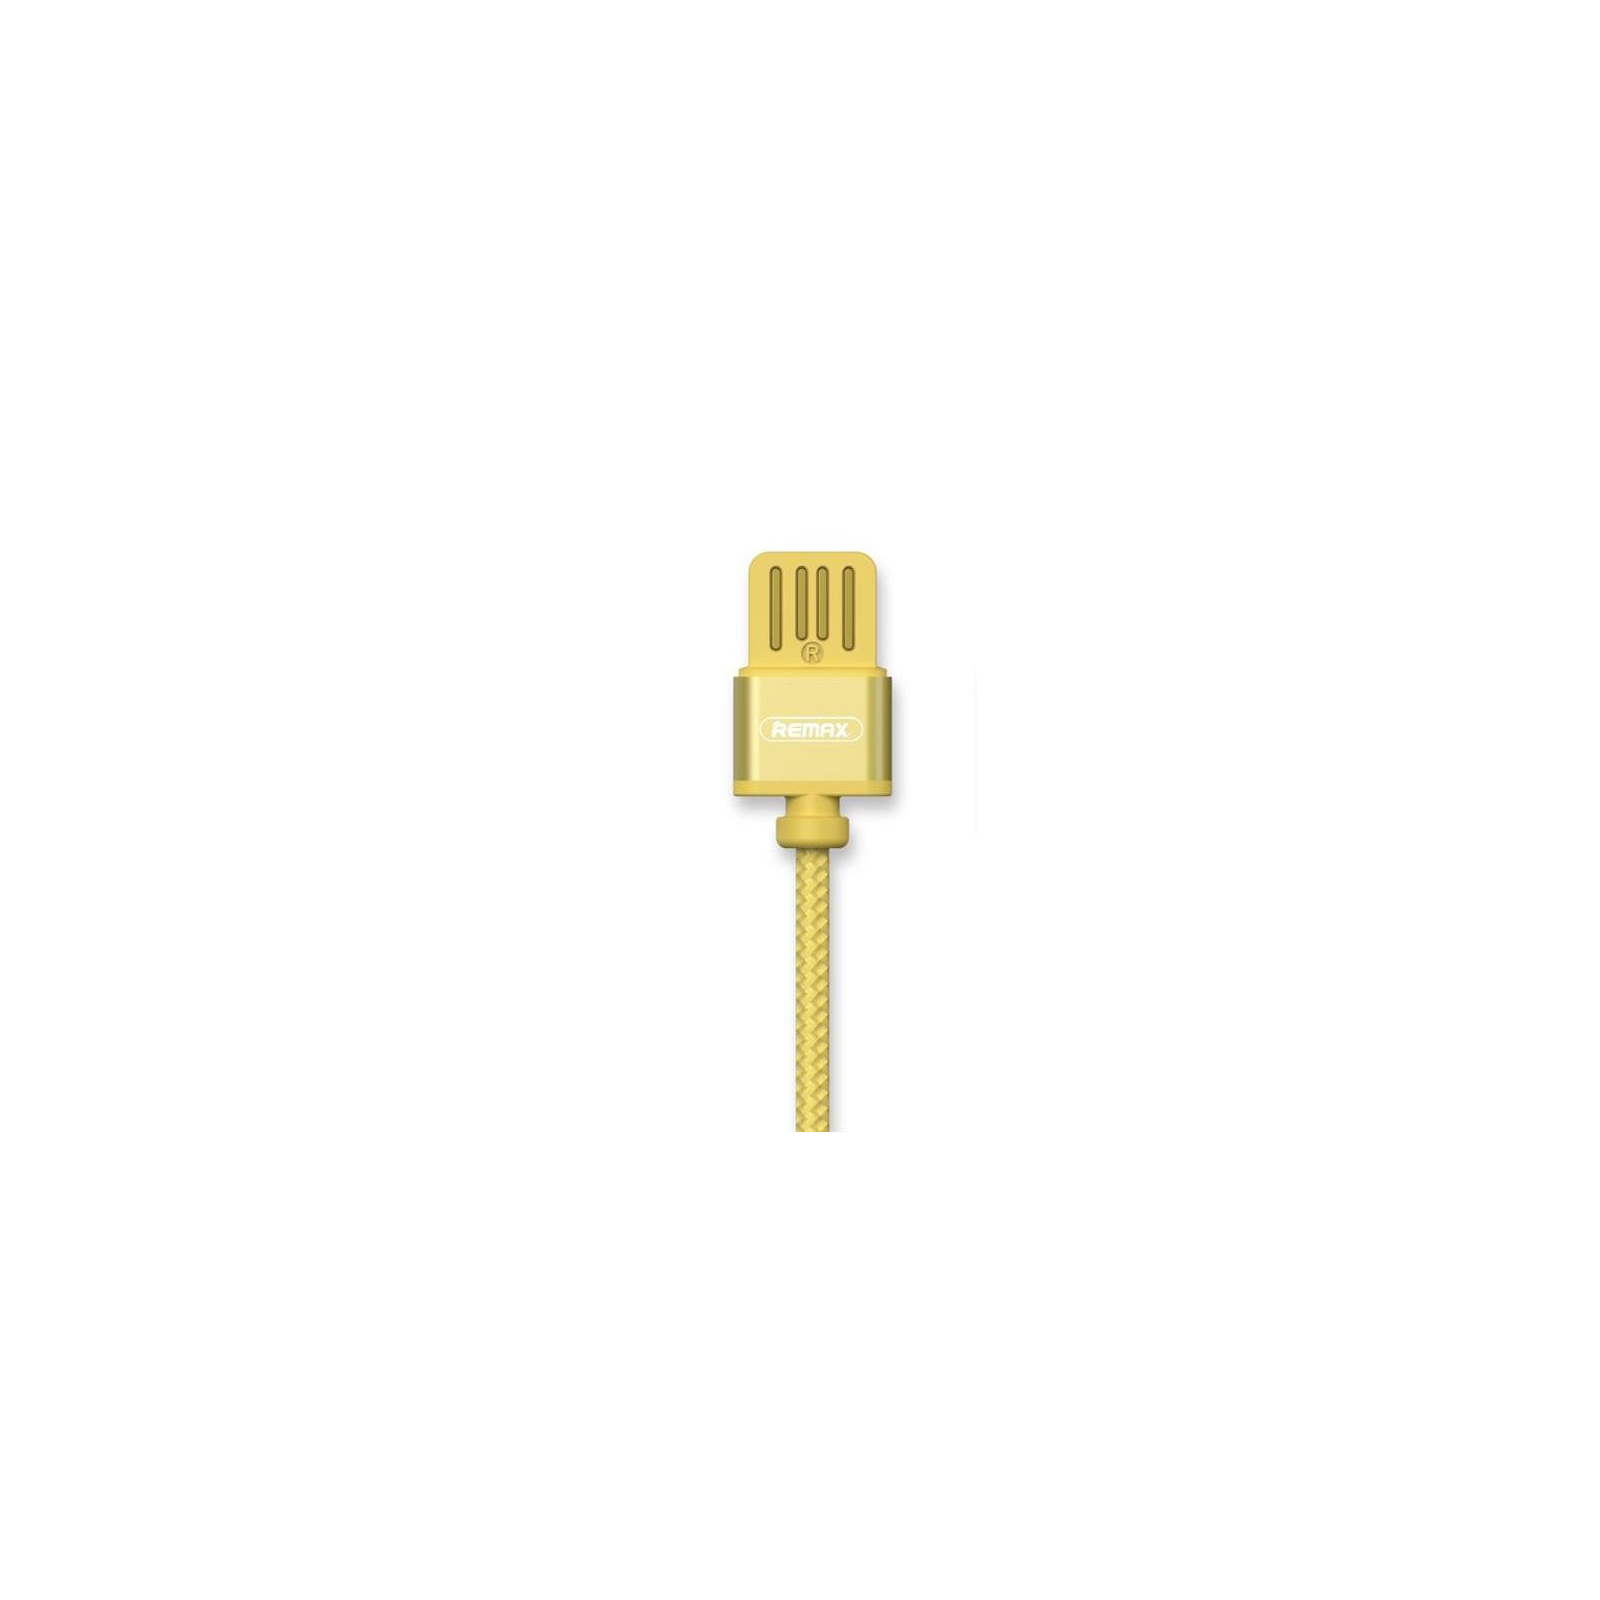 Дата кабель USB 2.0 AM to Lightning 1.0m Gravity series Magnetic gold Remax (RC-095I-GOLD) изображение 3